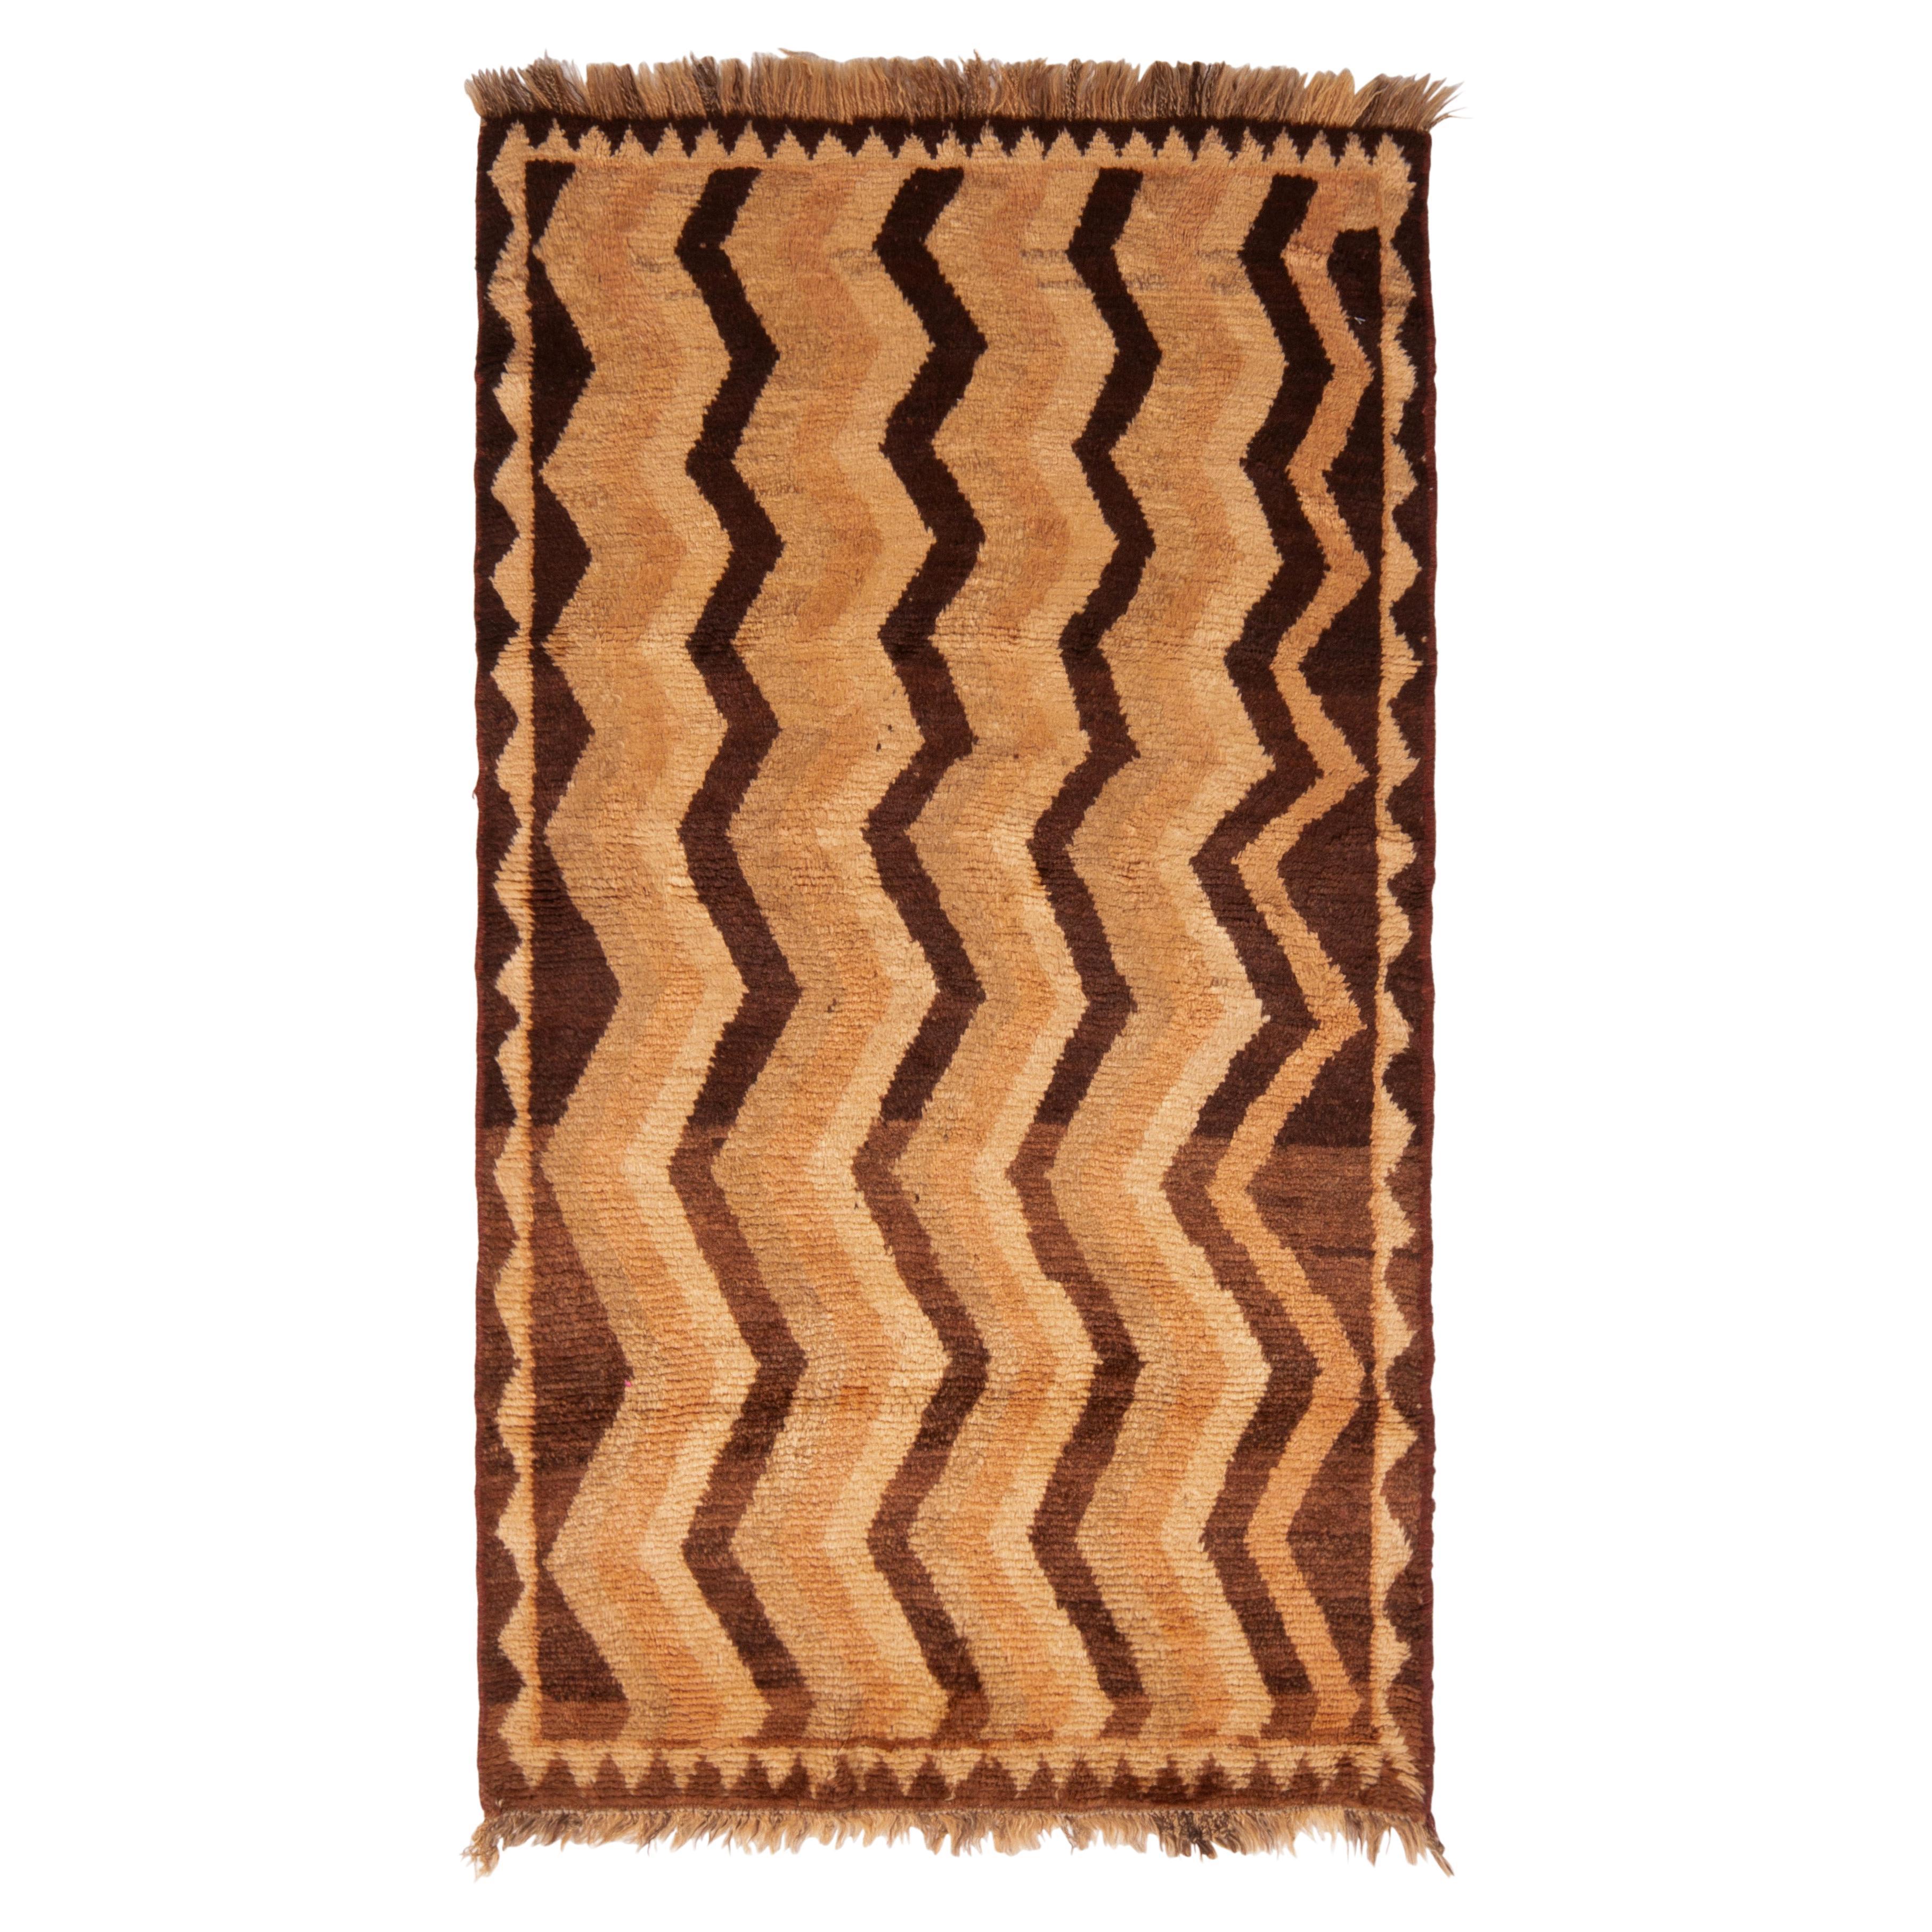 Antique Gabbeh Geometric Beige Brown Wool Persian Rug by Rug & Kilim For Sale